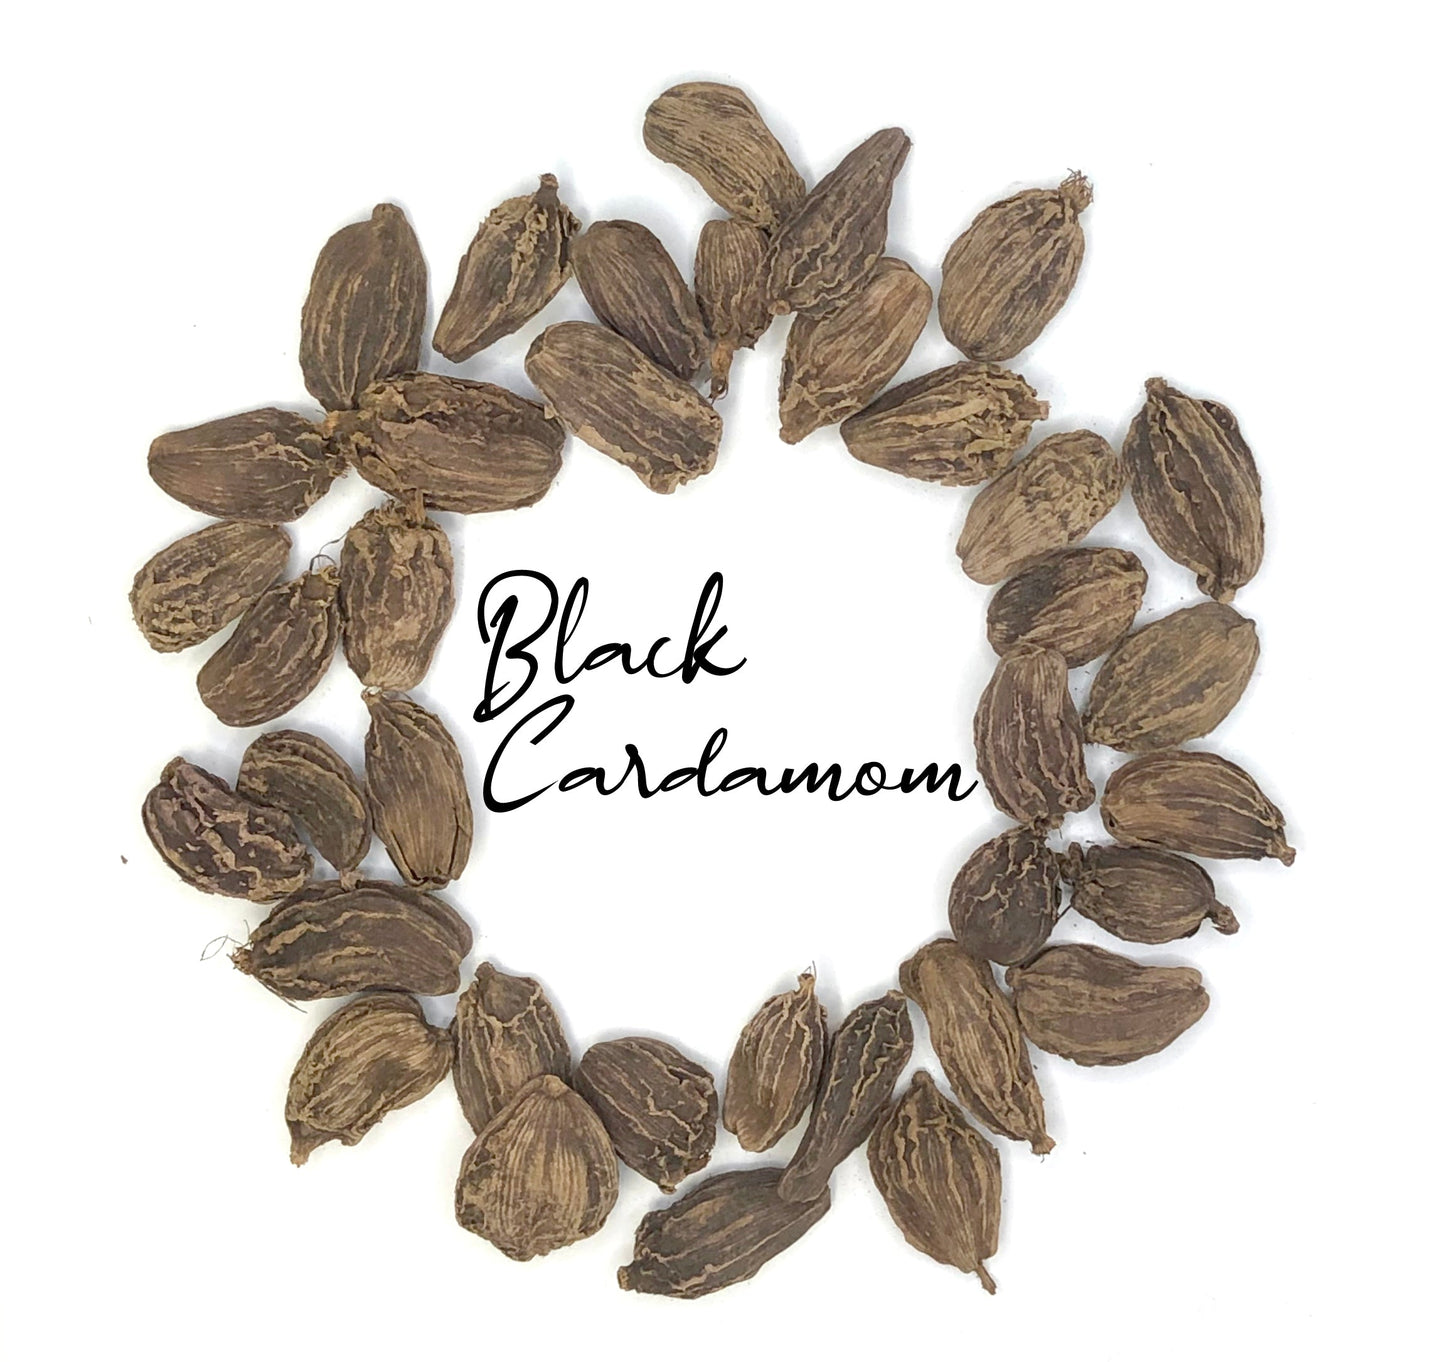 Wholesale Spices & Herbs - Black Cardamom Whole, Organic 1lb (454g) Bag